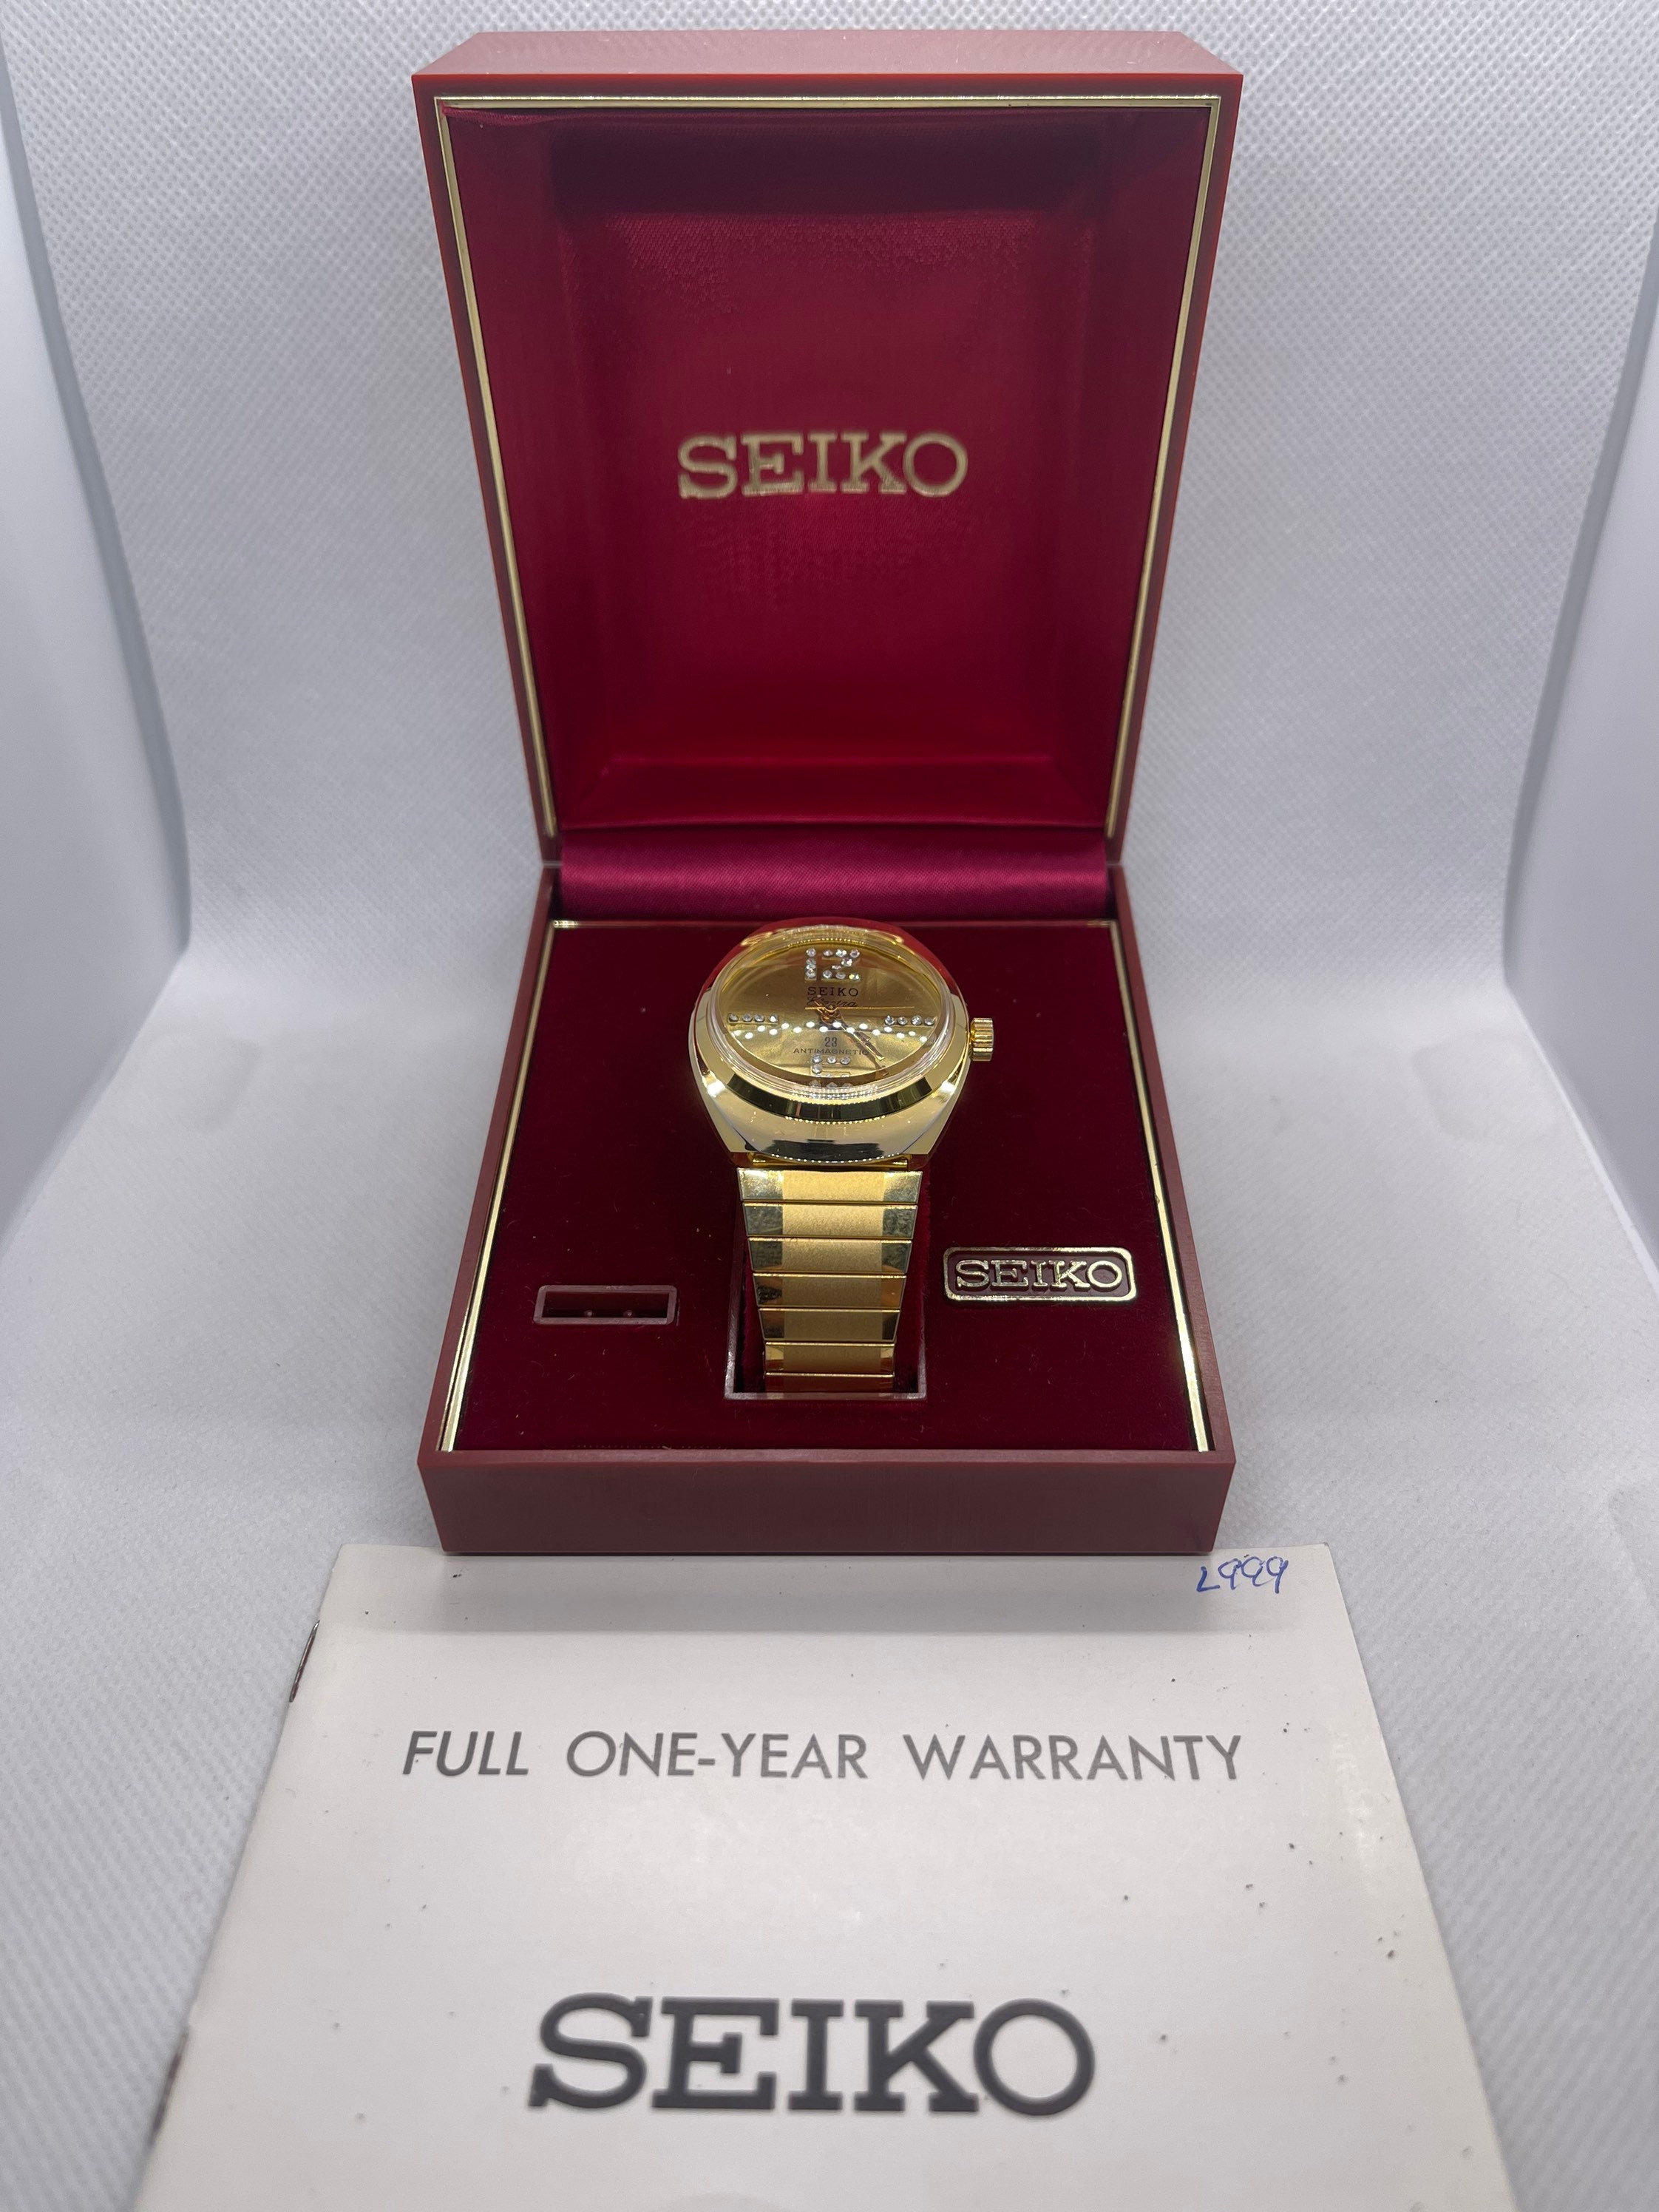 Seiko Watch Box - Etsy